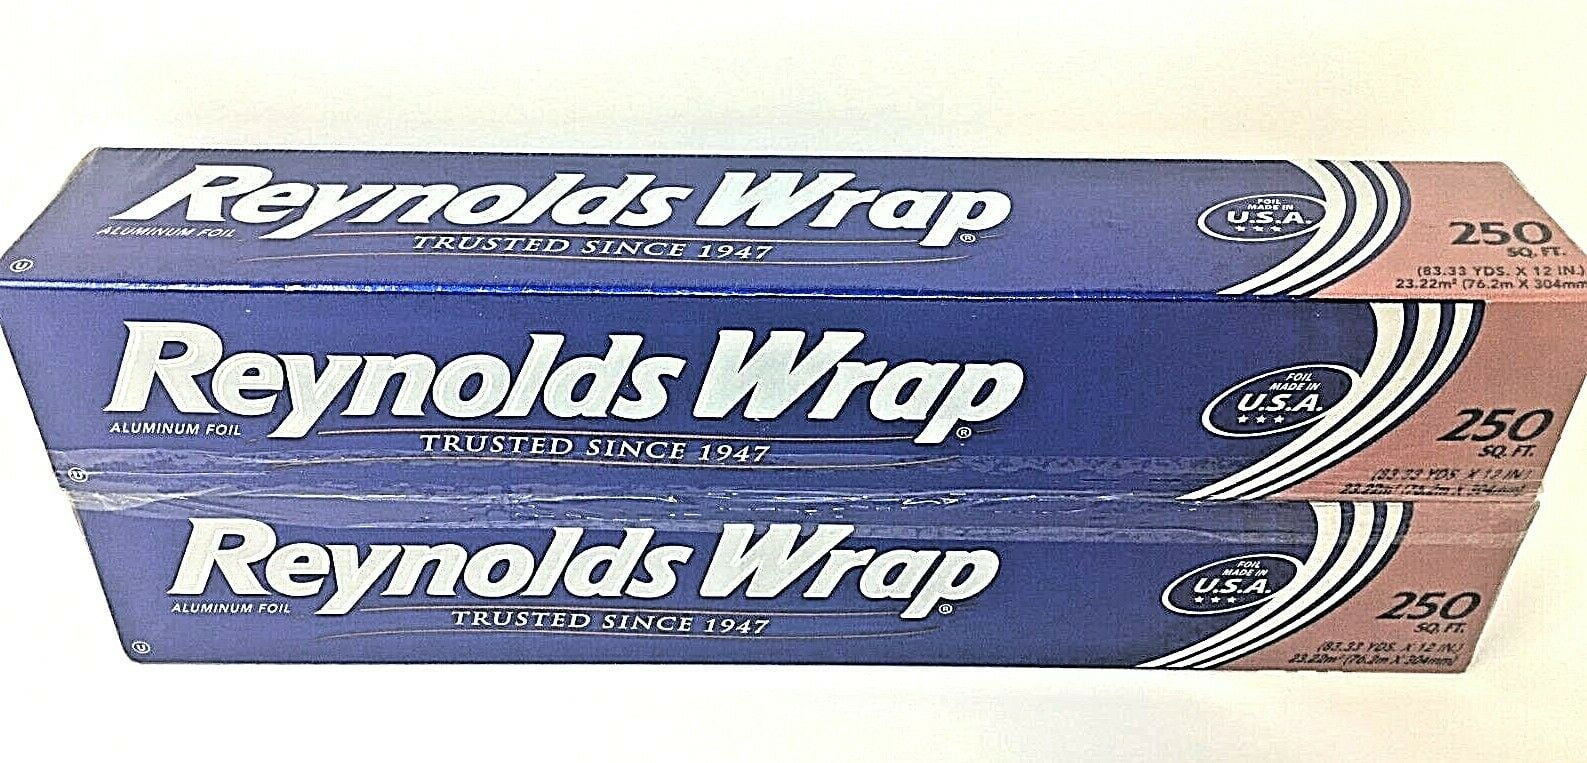 Reynolds Wrap Aluminum Foil 250 SQ. FT. Reynolds Wrap(10900000147):  customers reviews @